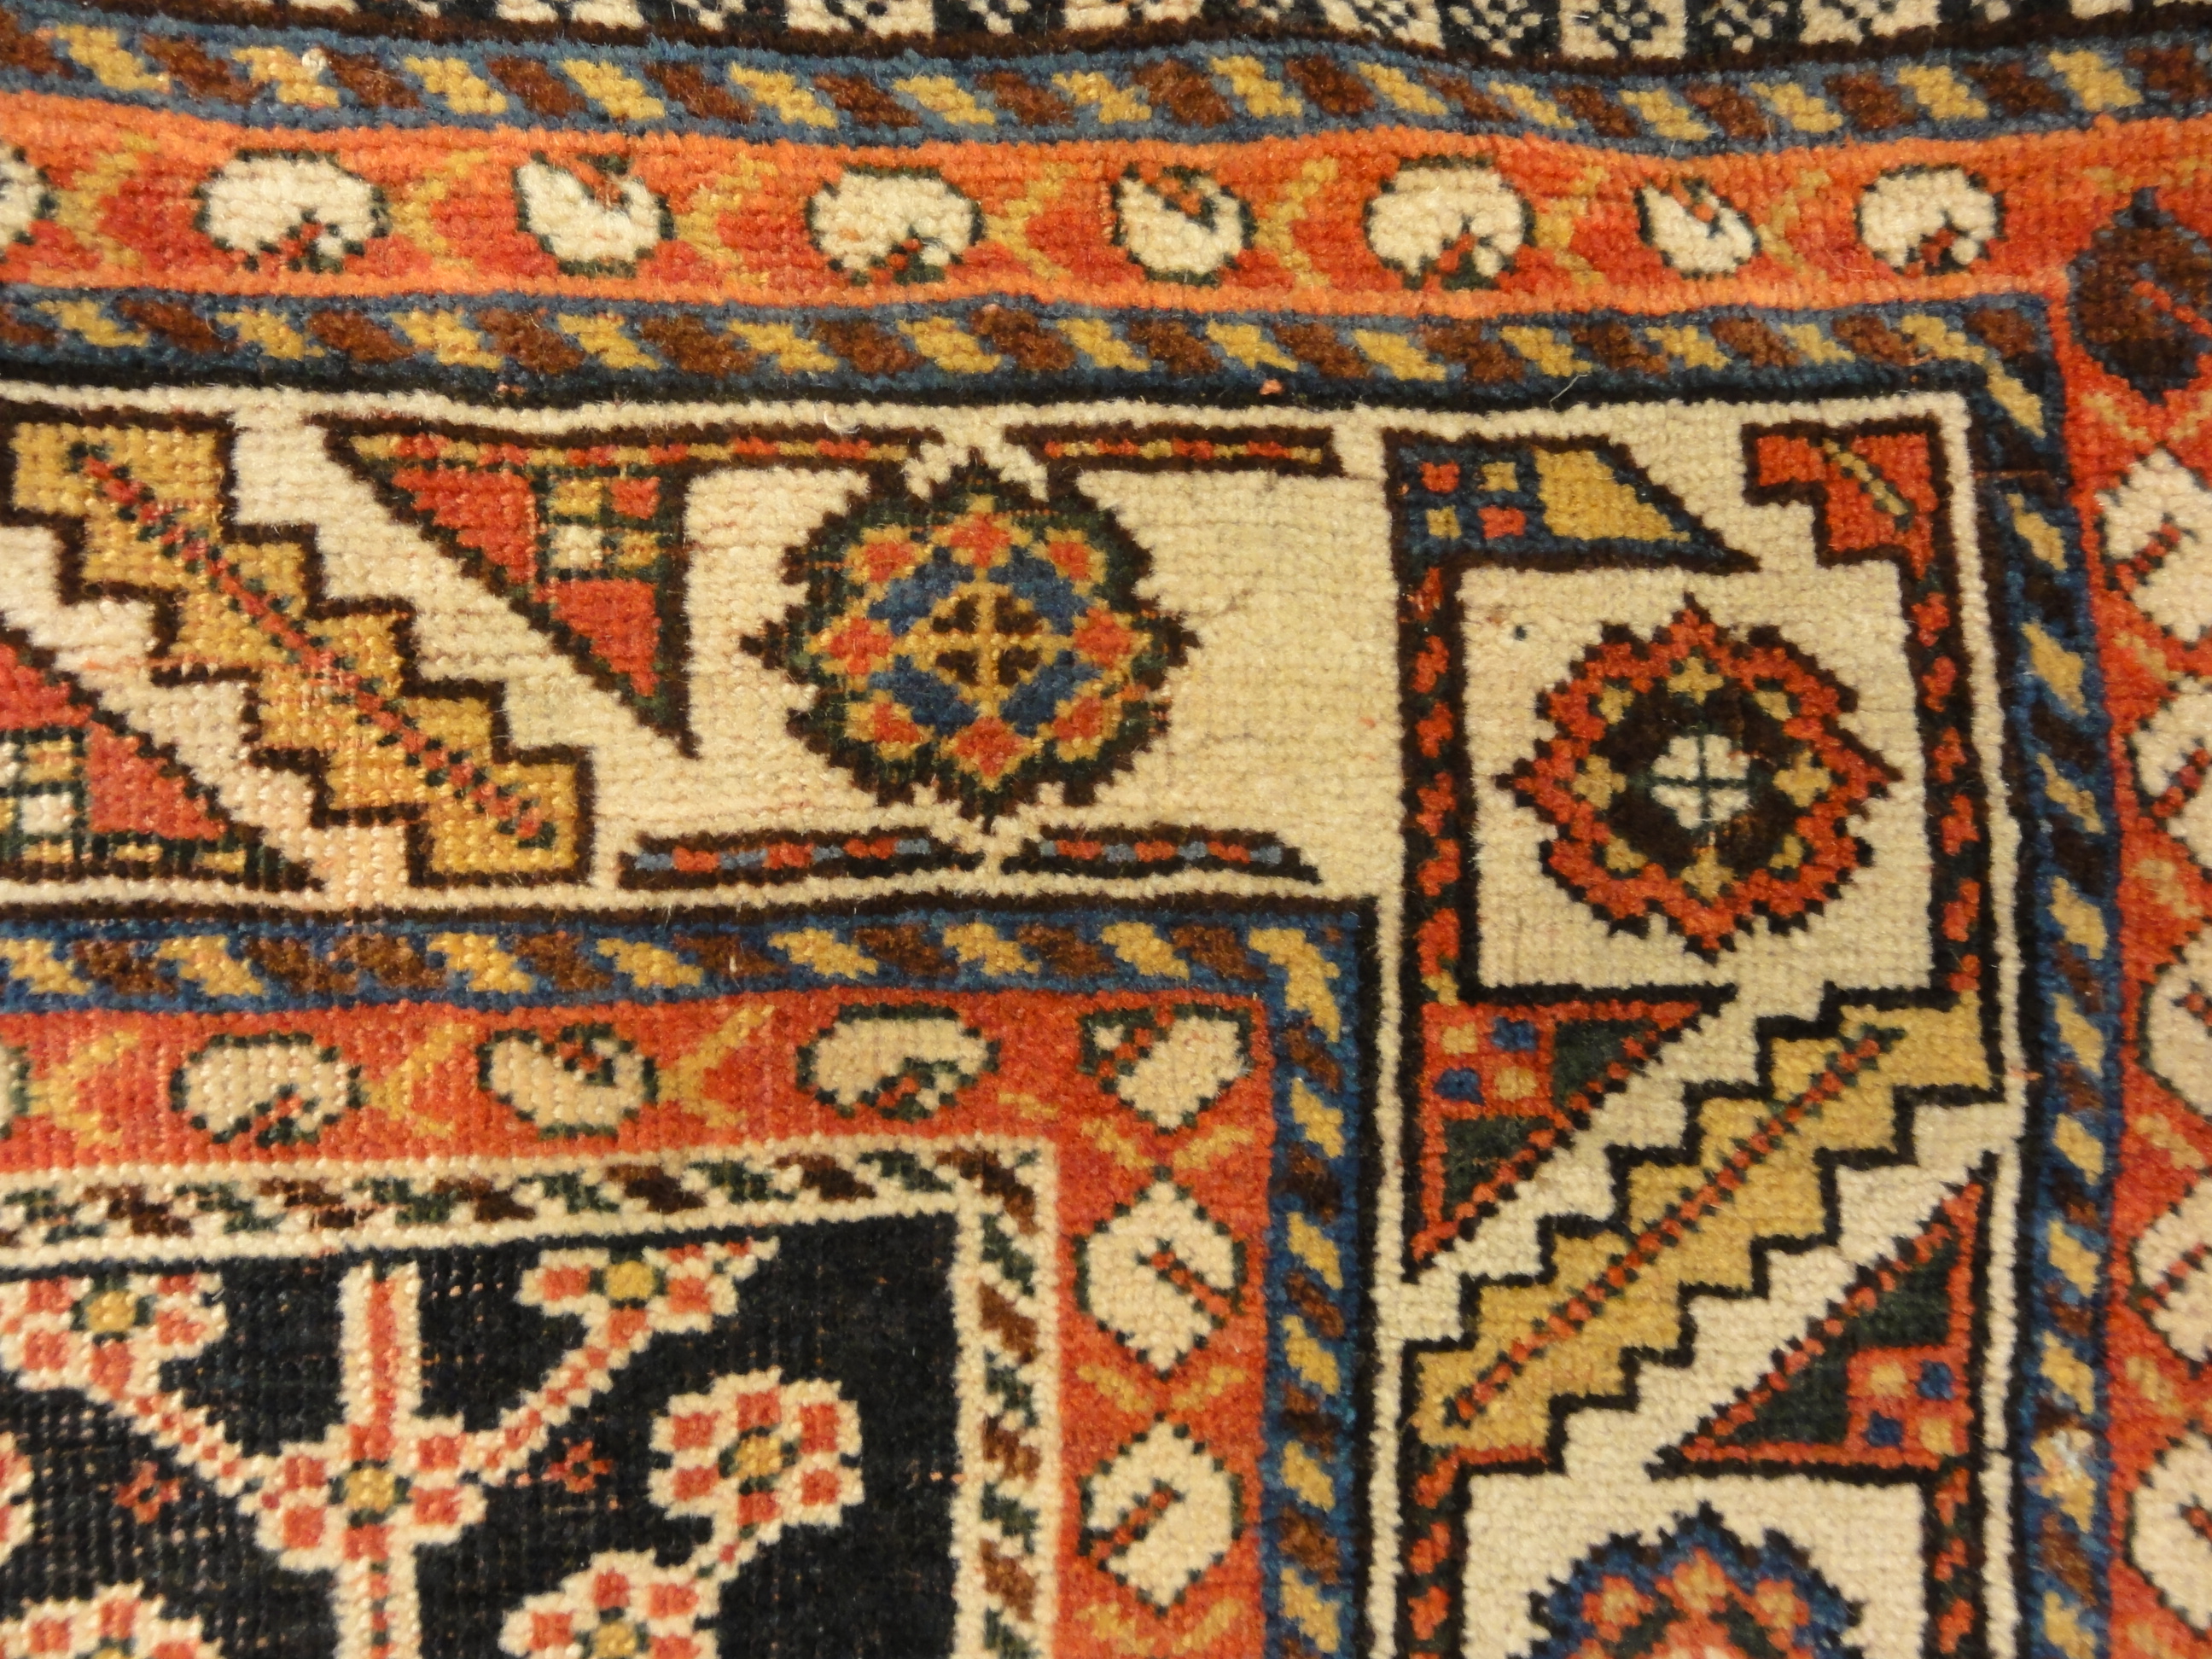 Antique Persian Qashqai 19th Century Rug Genuine Authentic Intricate Woven Carpet Art Santa Barbara Design Center Rugs and More